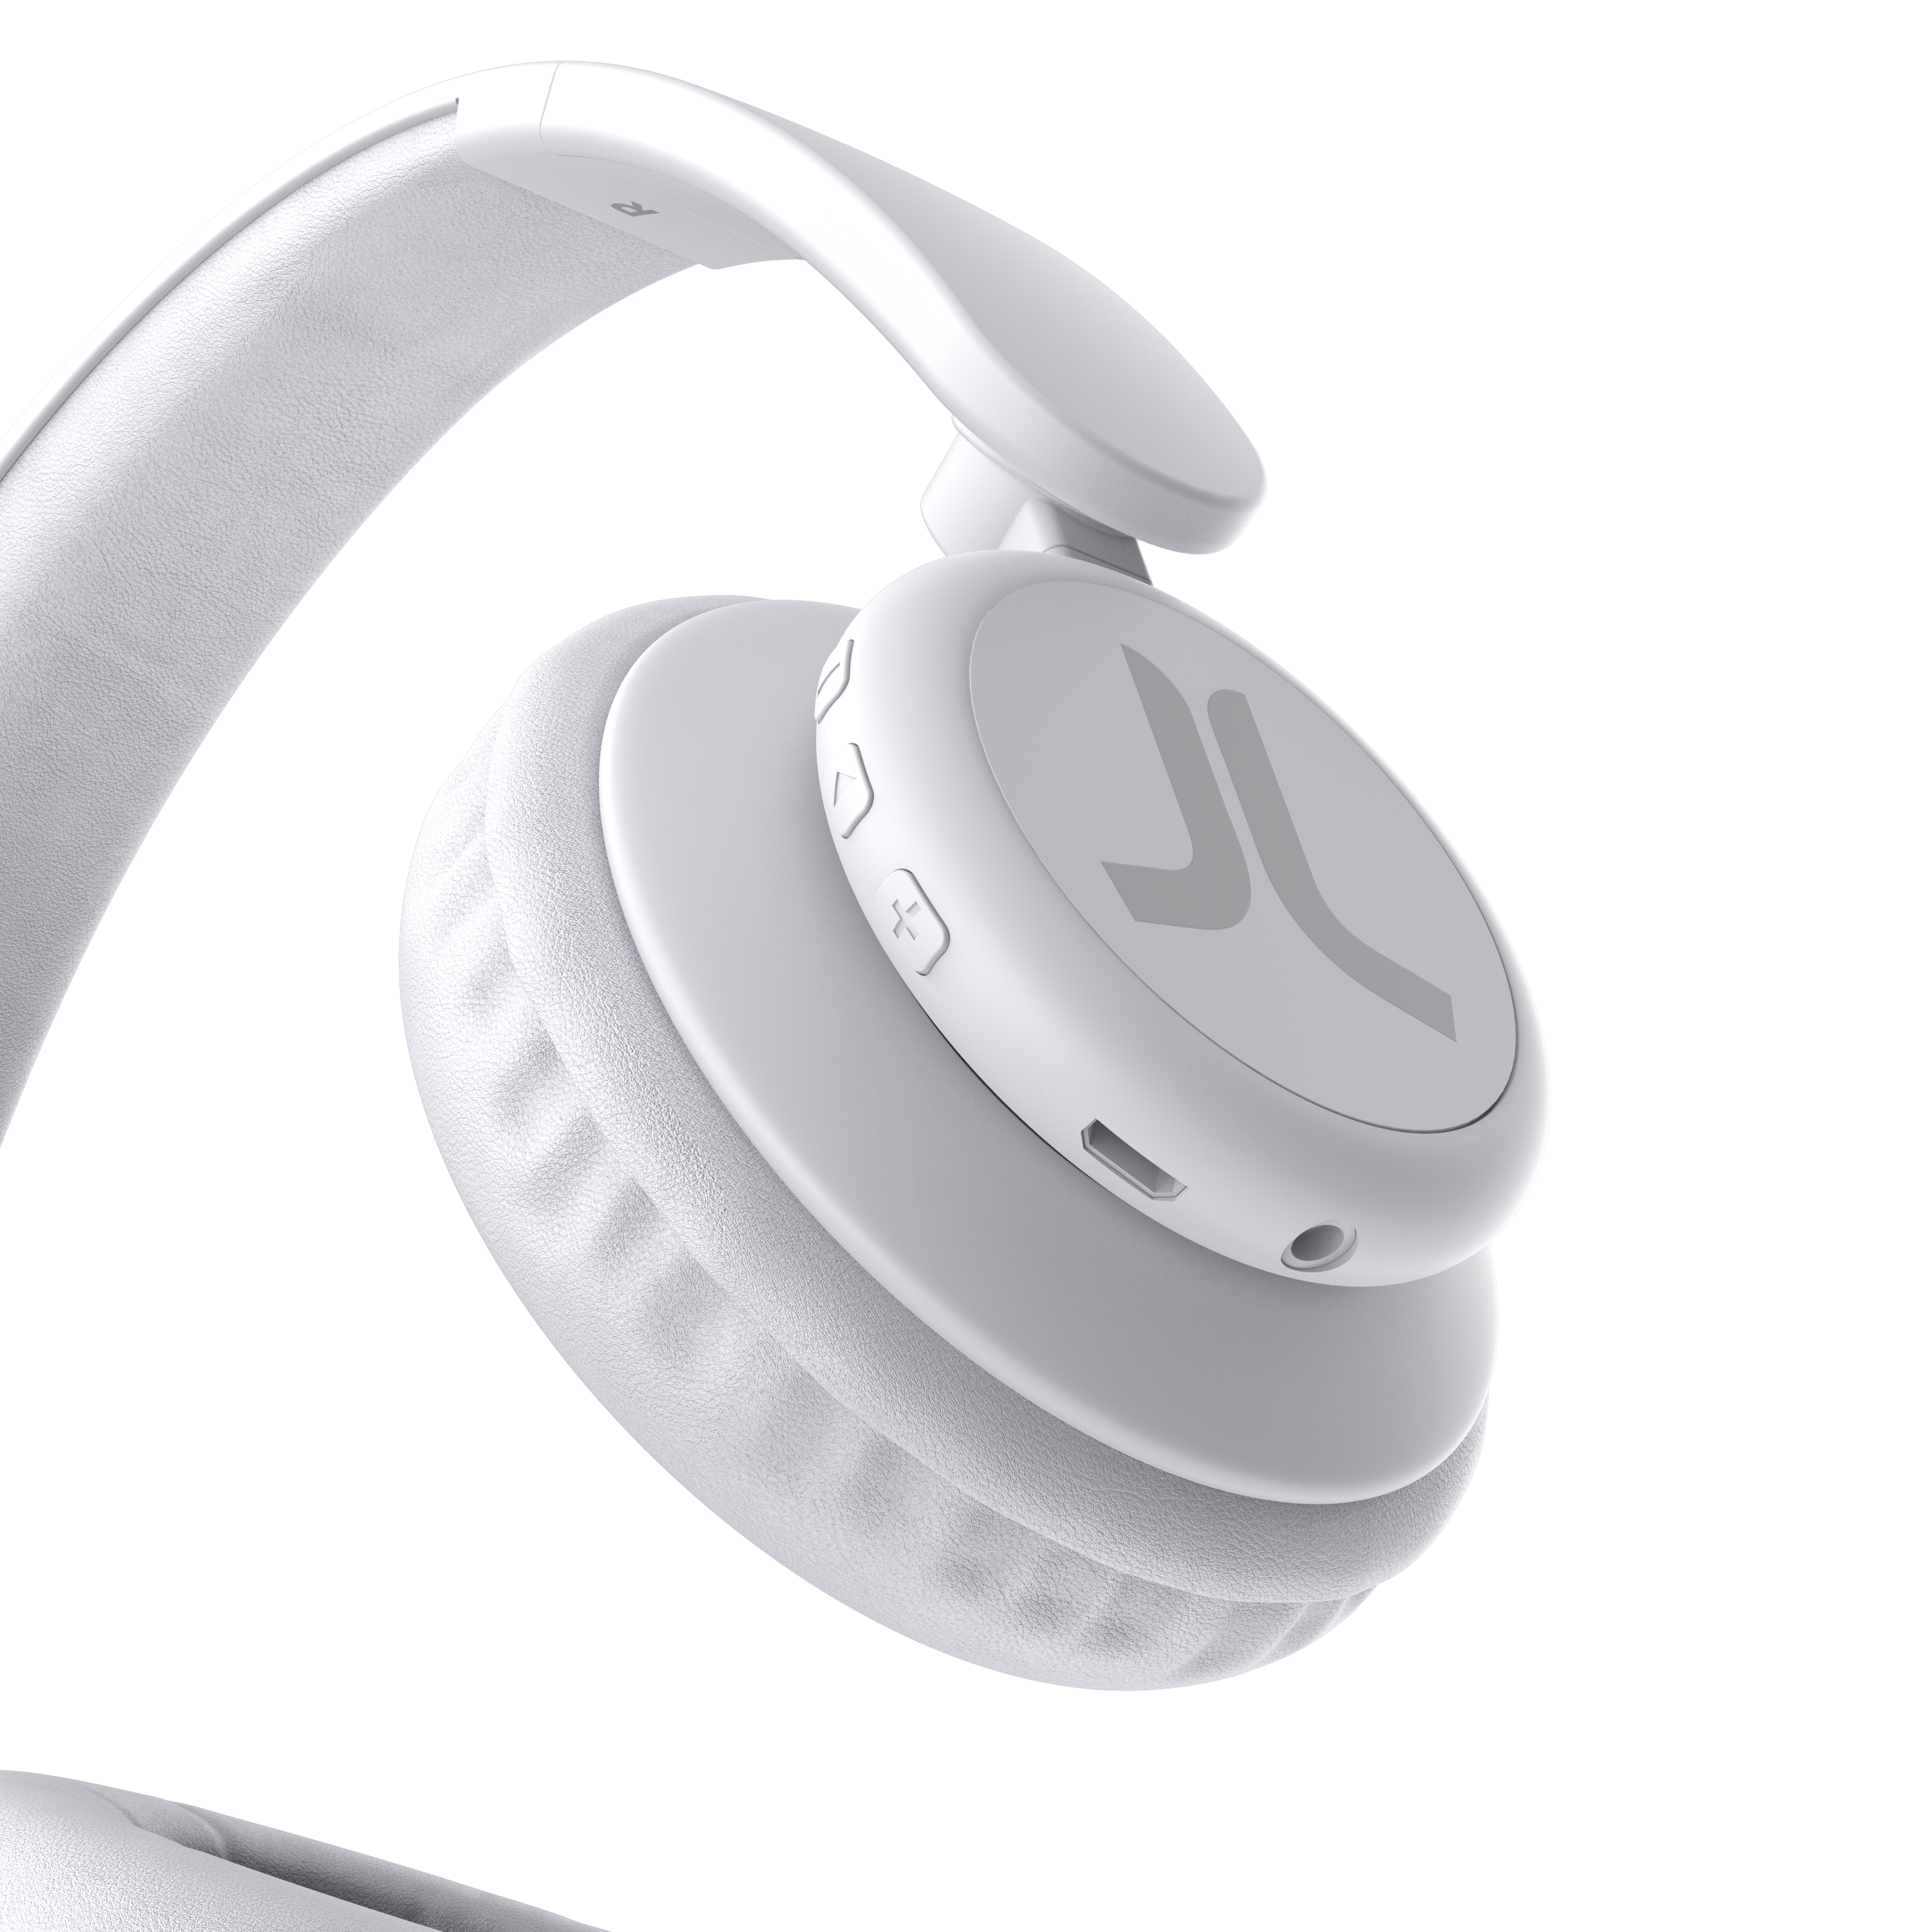 WESC Audio - Wireless Bluetooth On-Ear Headphones - White